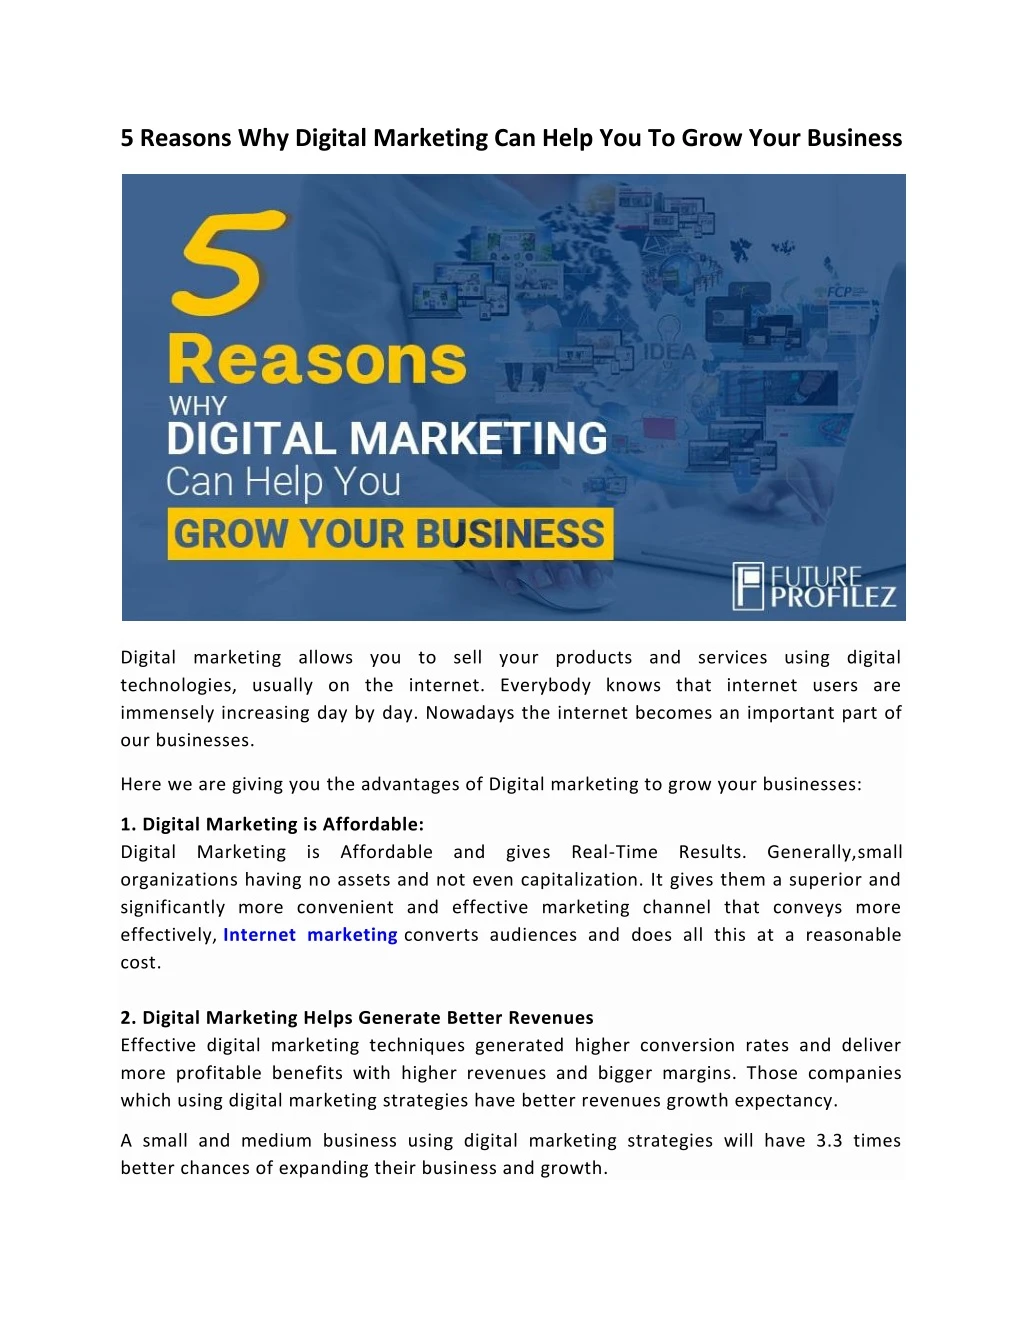 5 reasons why digital marketing can help